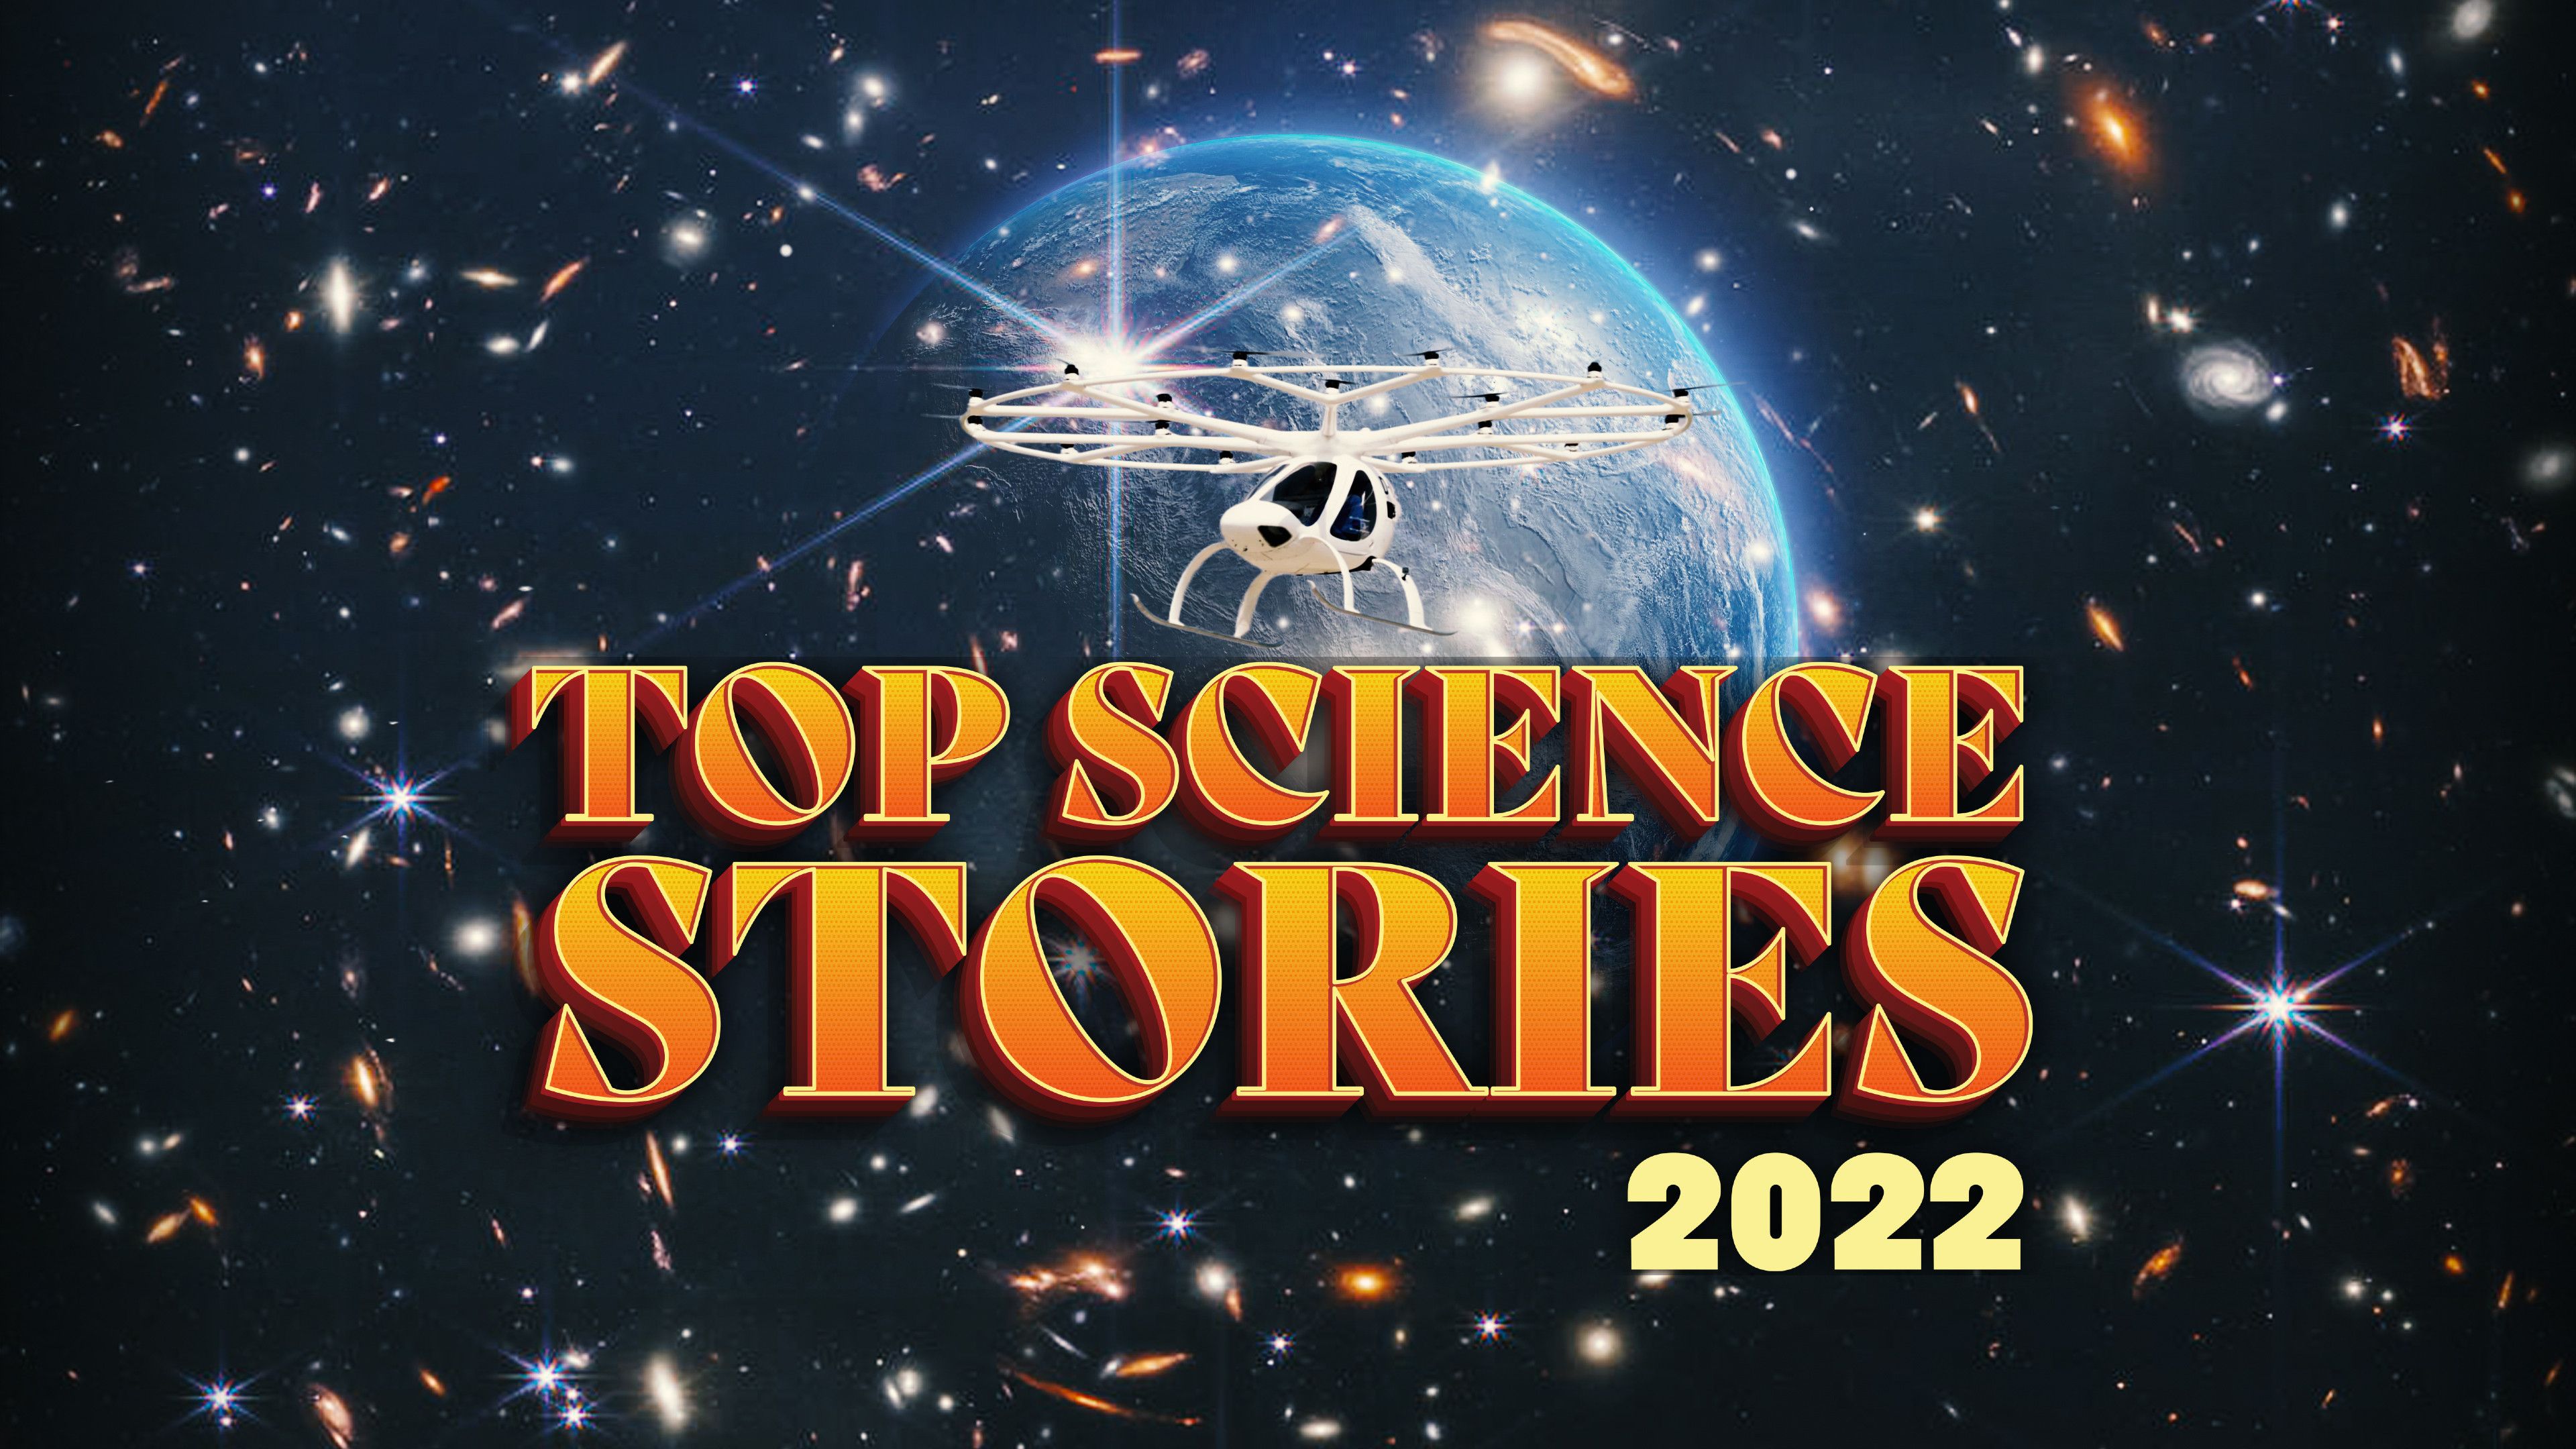 Top Science Stories of 2022